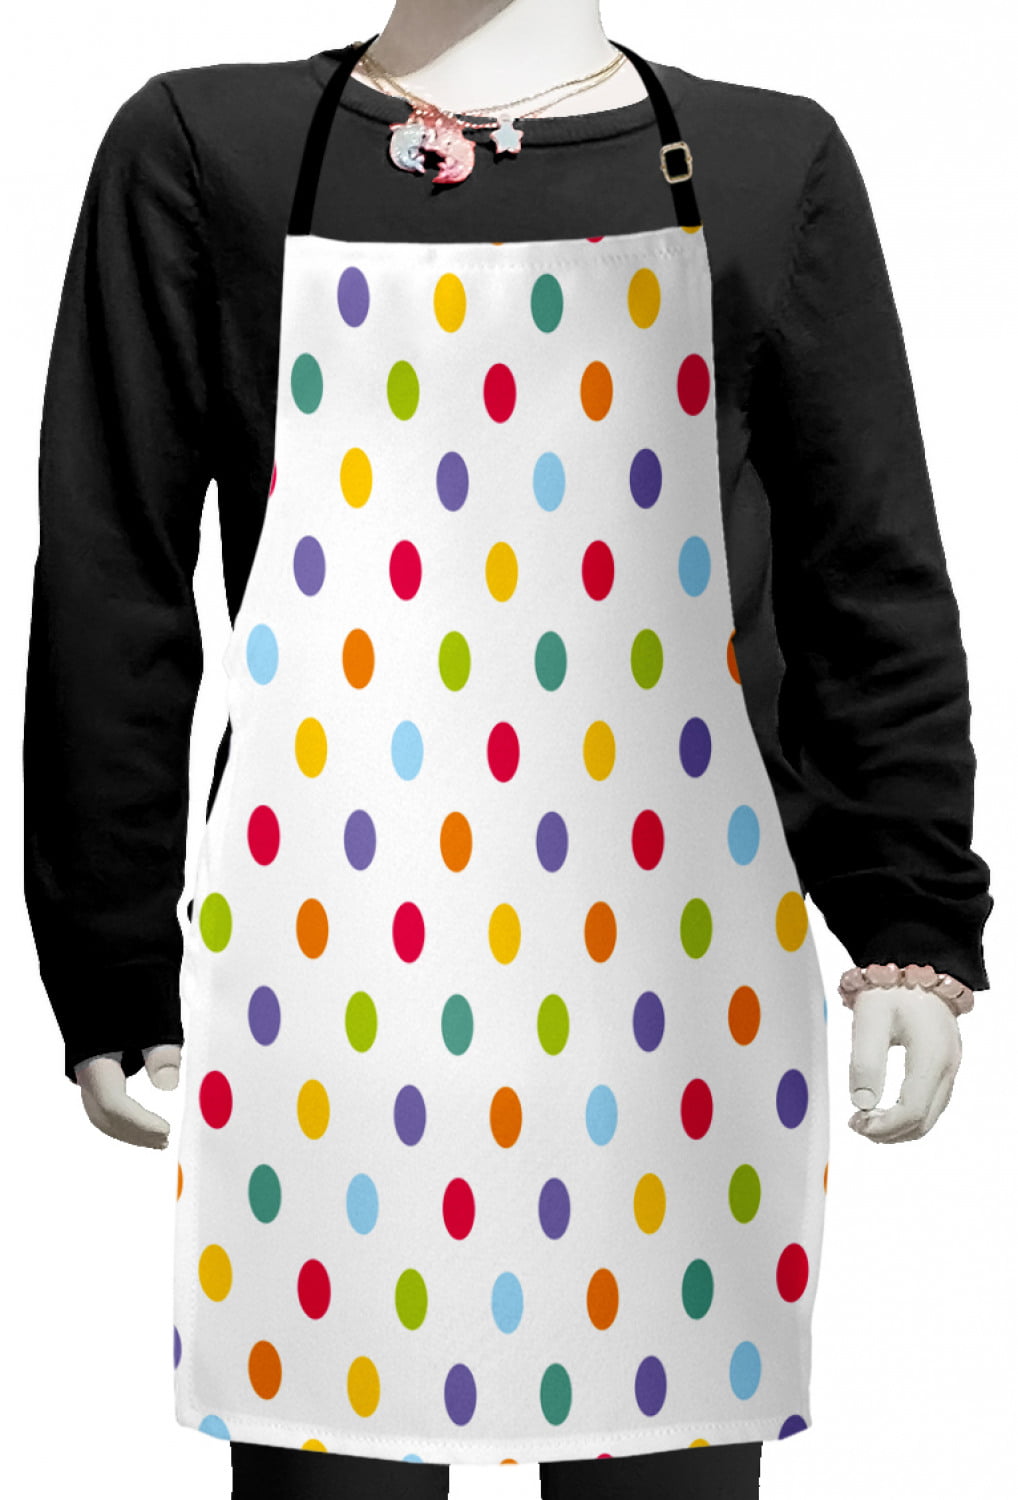 Polka Dots Design Kids Children Apron 100% Cotton Baking Cooking 2-5 Years 